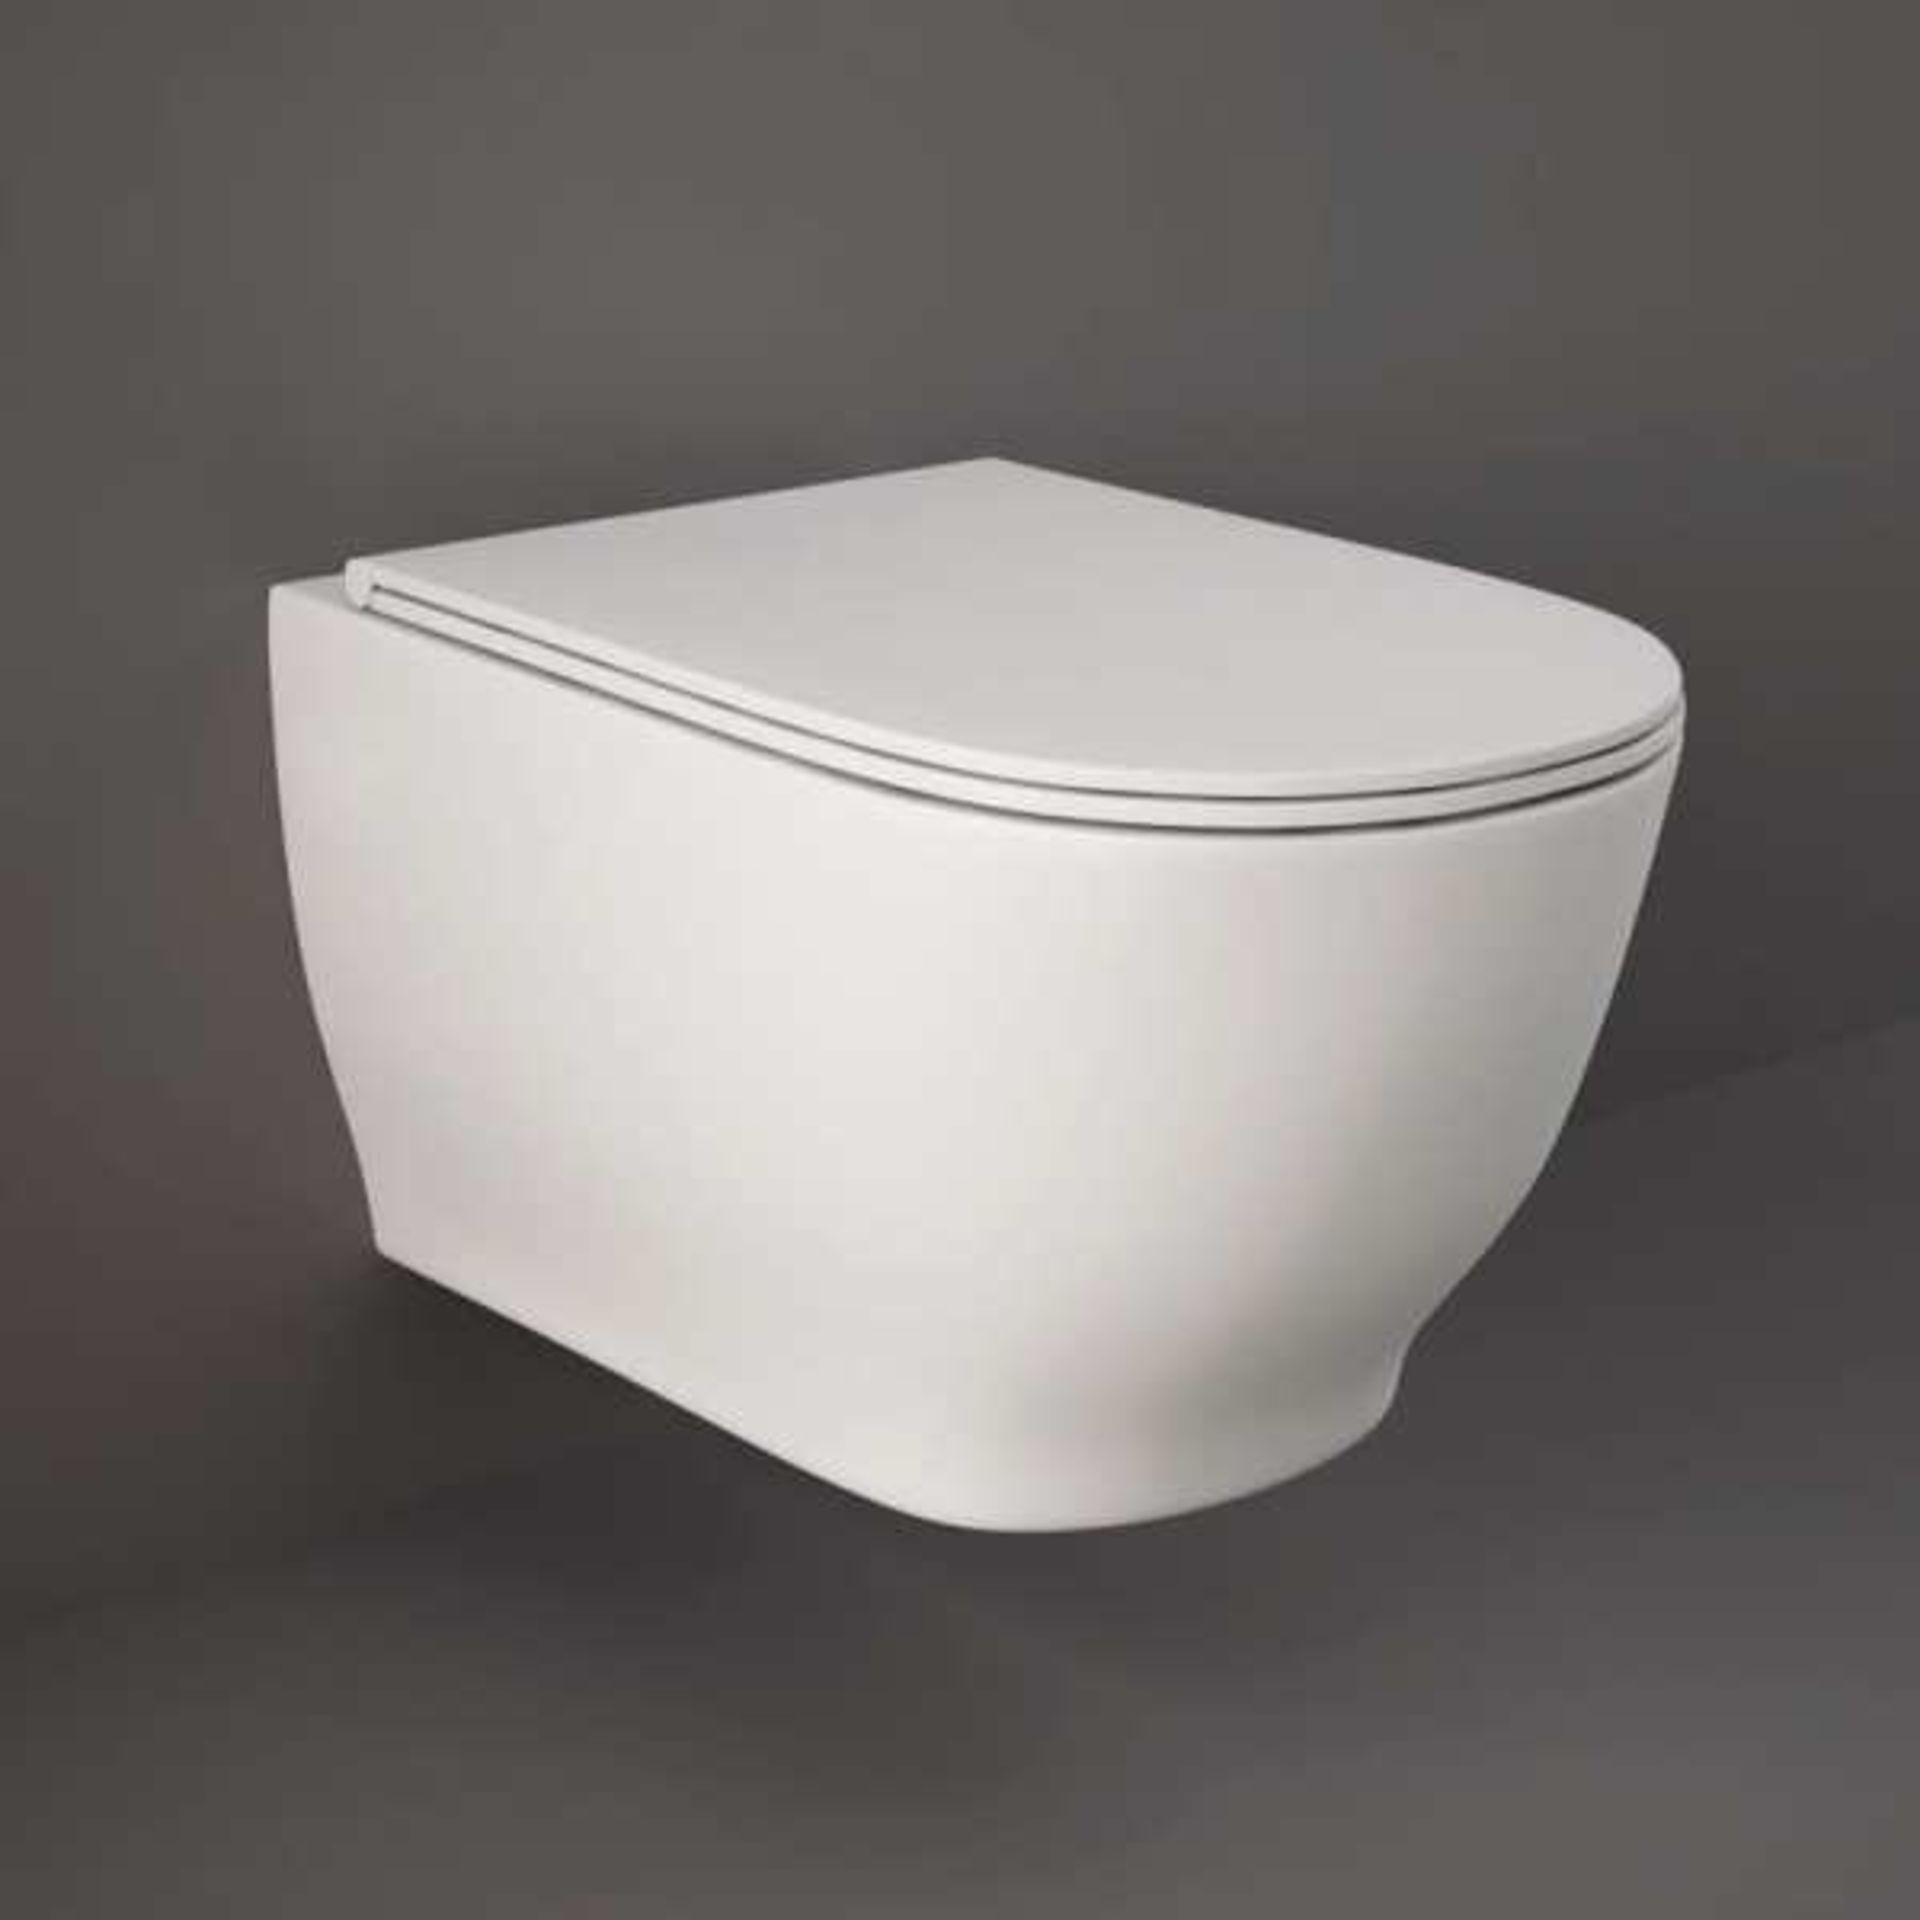 Rak Ceramics RAK Moon Wall Hung Toilet With Soft Close Seat - Hidden Fixings - White